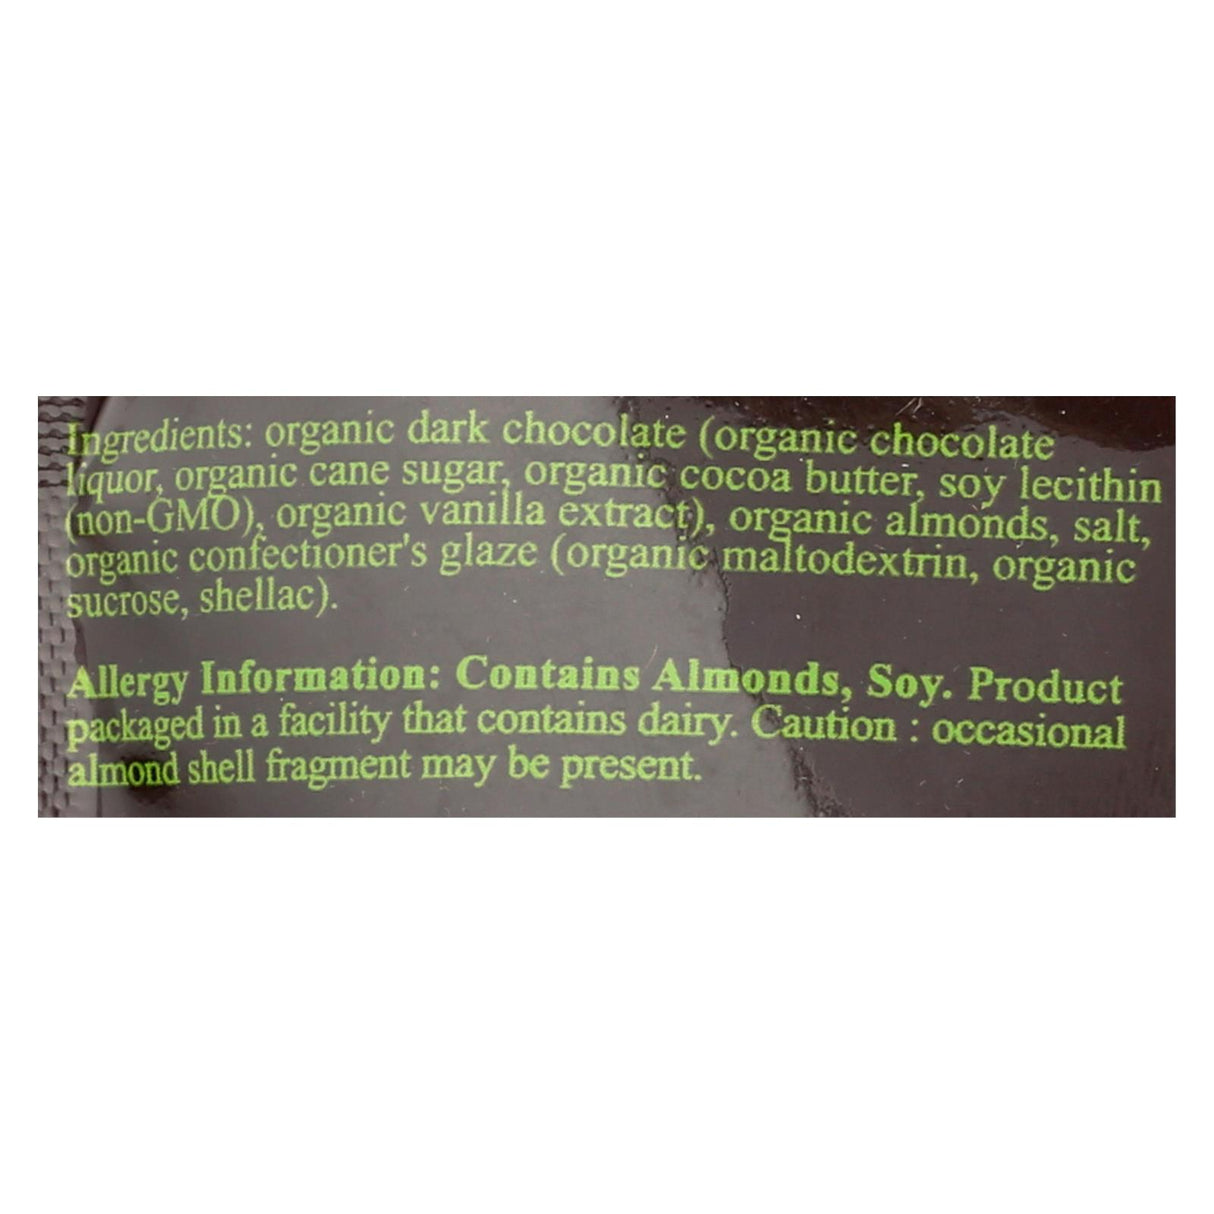 Next Organics Organic Dark Chocolate Almonds 4 Oz. (Case of 6) - Cozy Farm 